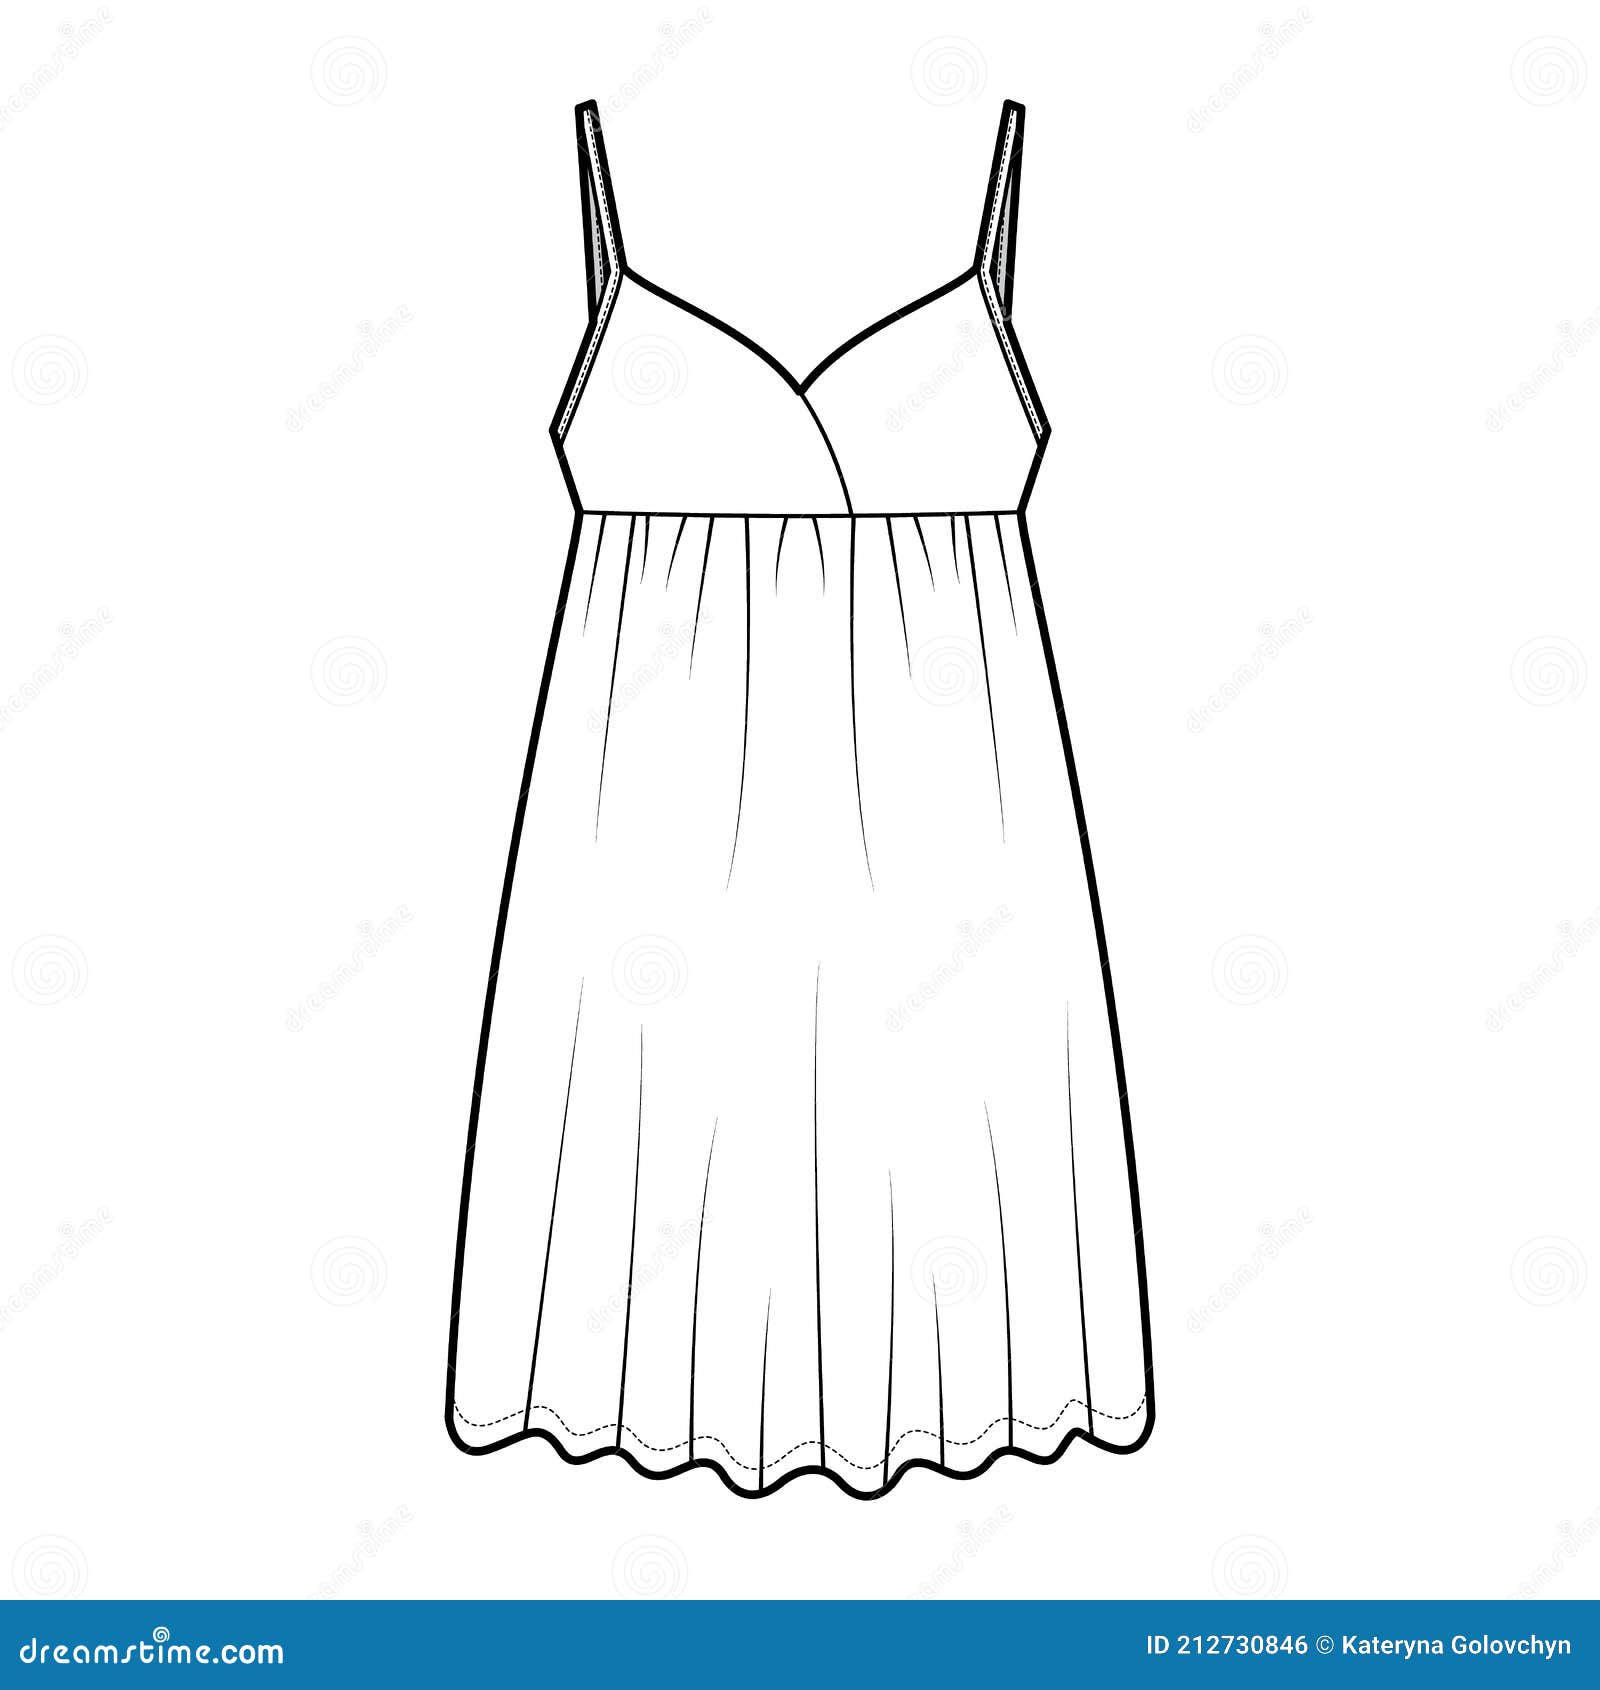 Babydoll Dress Sleepwear Pajama Technical Fashion Illustration with Mini  Length, Oversized, Adjustable Shoulder Straps Stock Vector - Illustration  of sleepwear, girl: 212730846